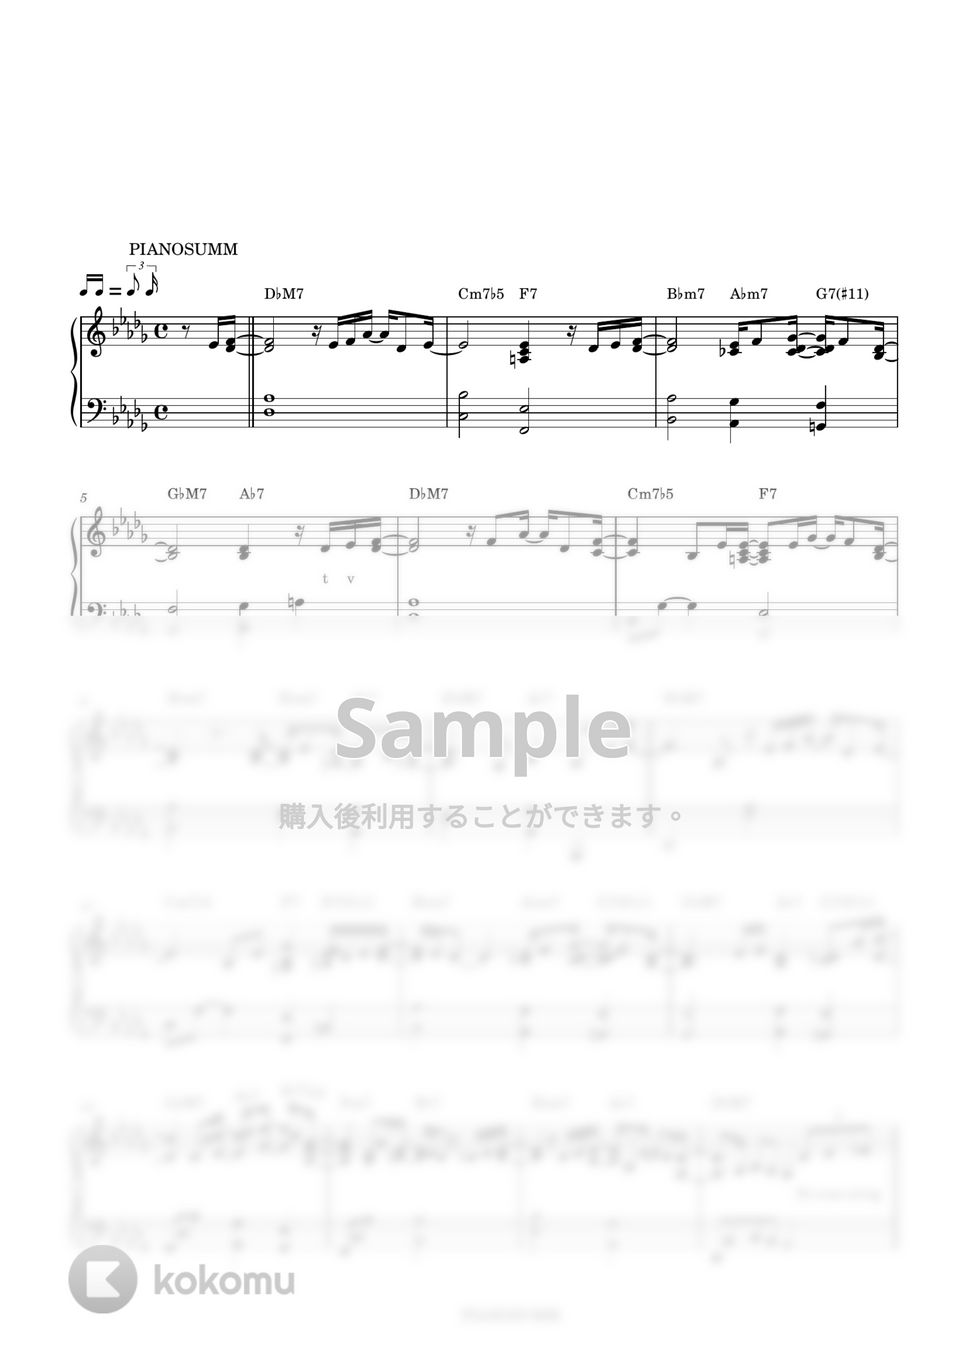 Paul Kim(폴킴) - Rain(비) (Includes Ckey) by PIANOSUMM